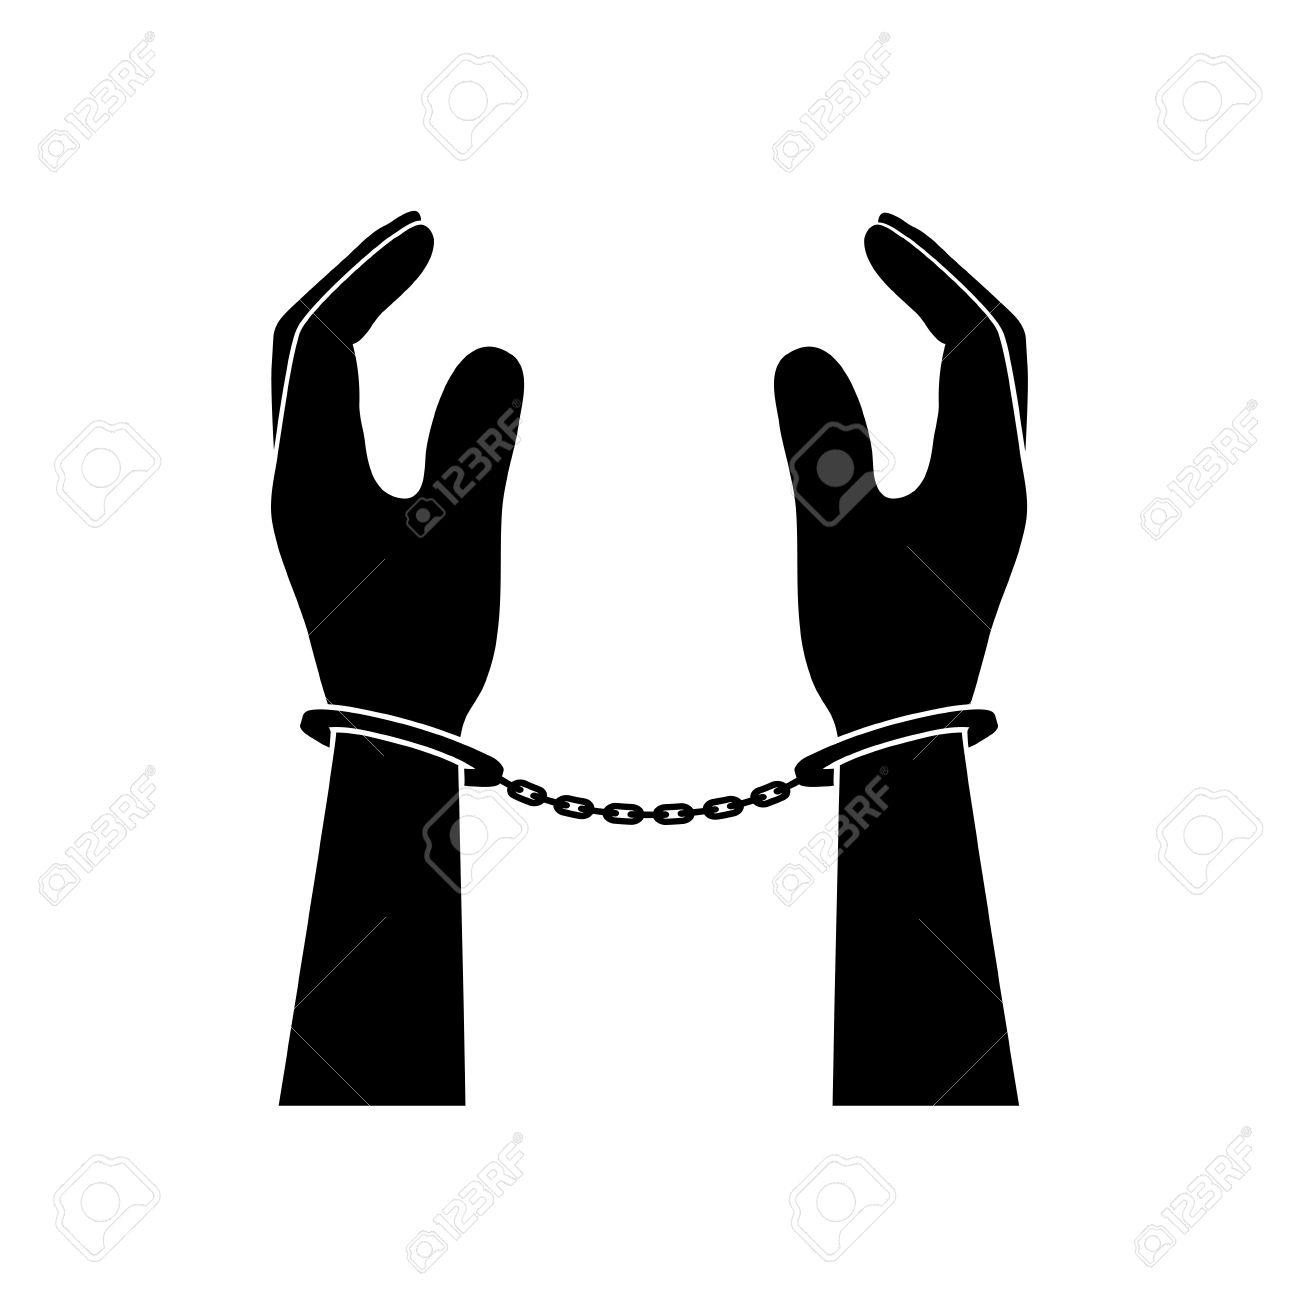 Handcuff clipart cuffed hand. Cuffs cliparts free download